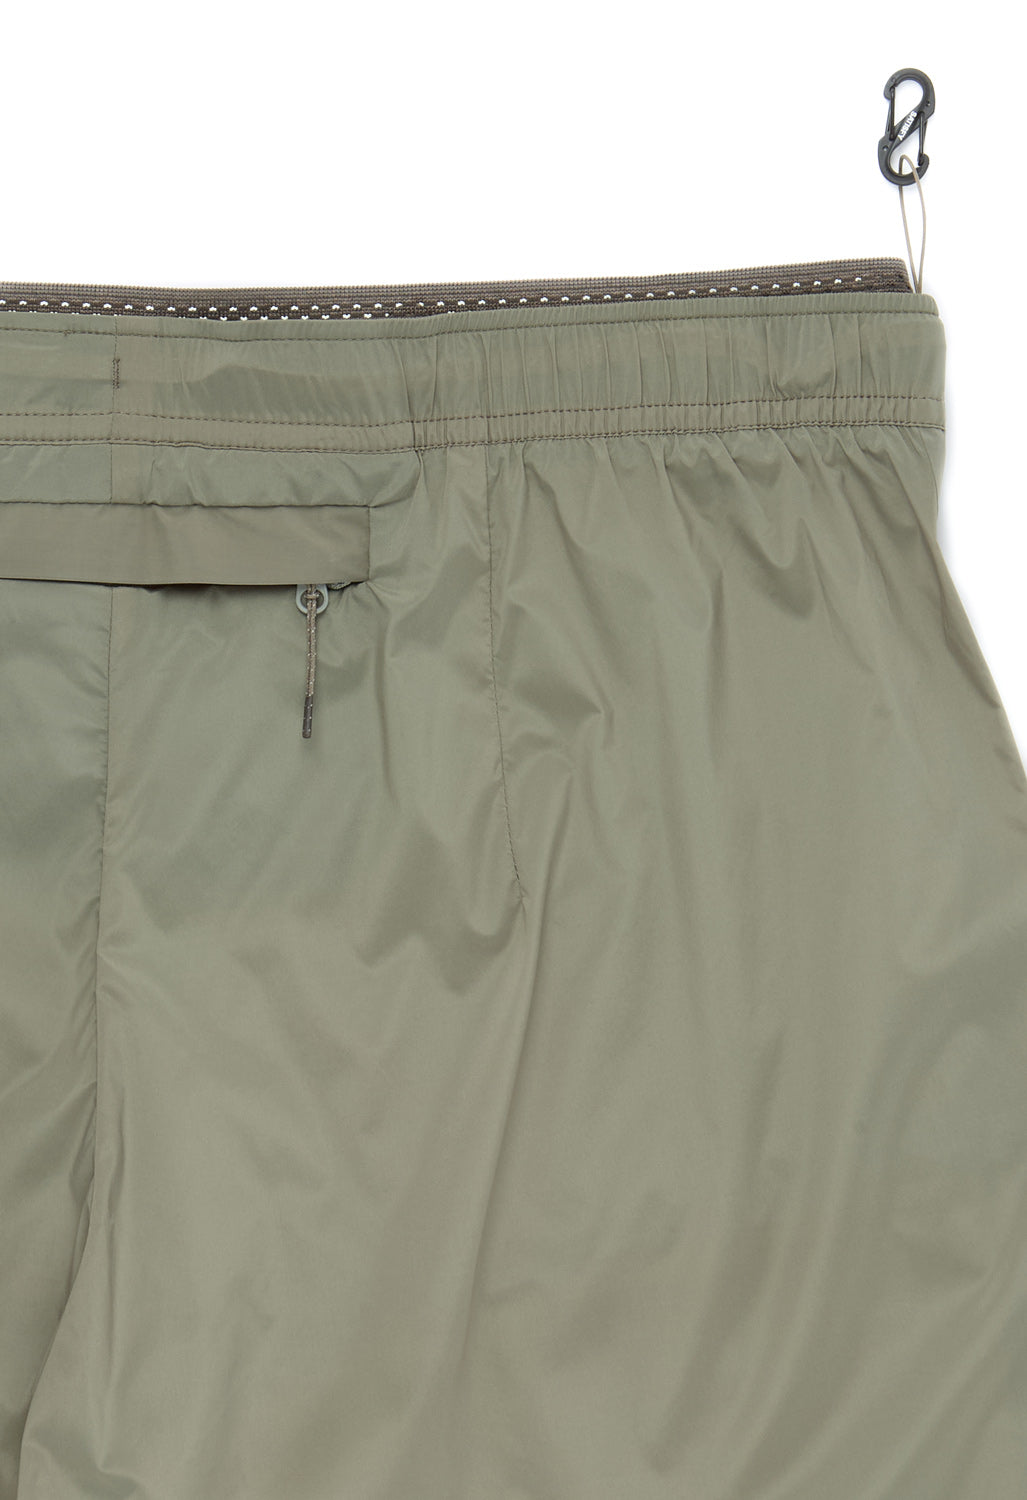 Satisfy Men's TechSilk 8" Shorts - Vetiver